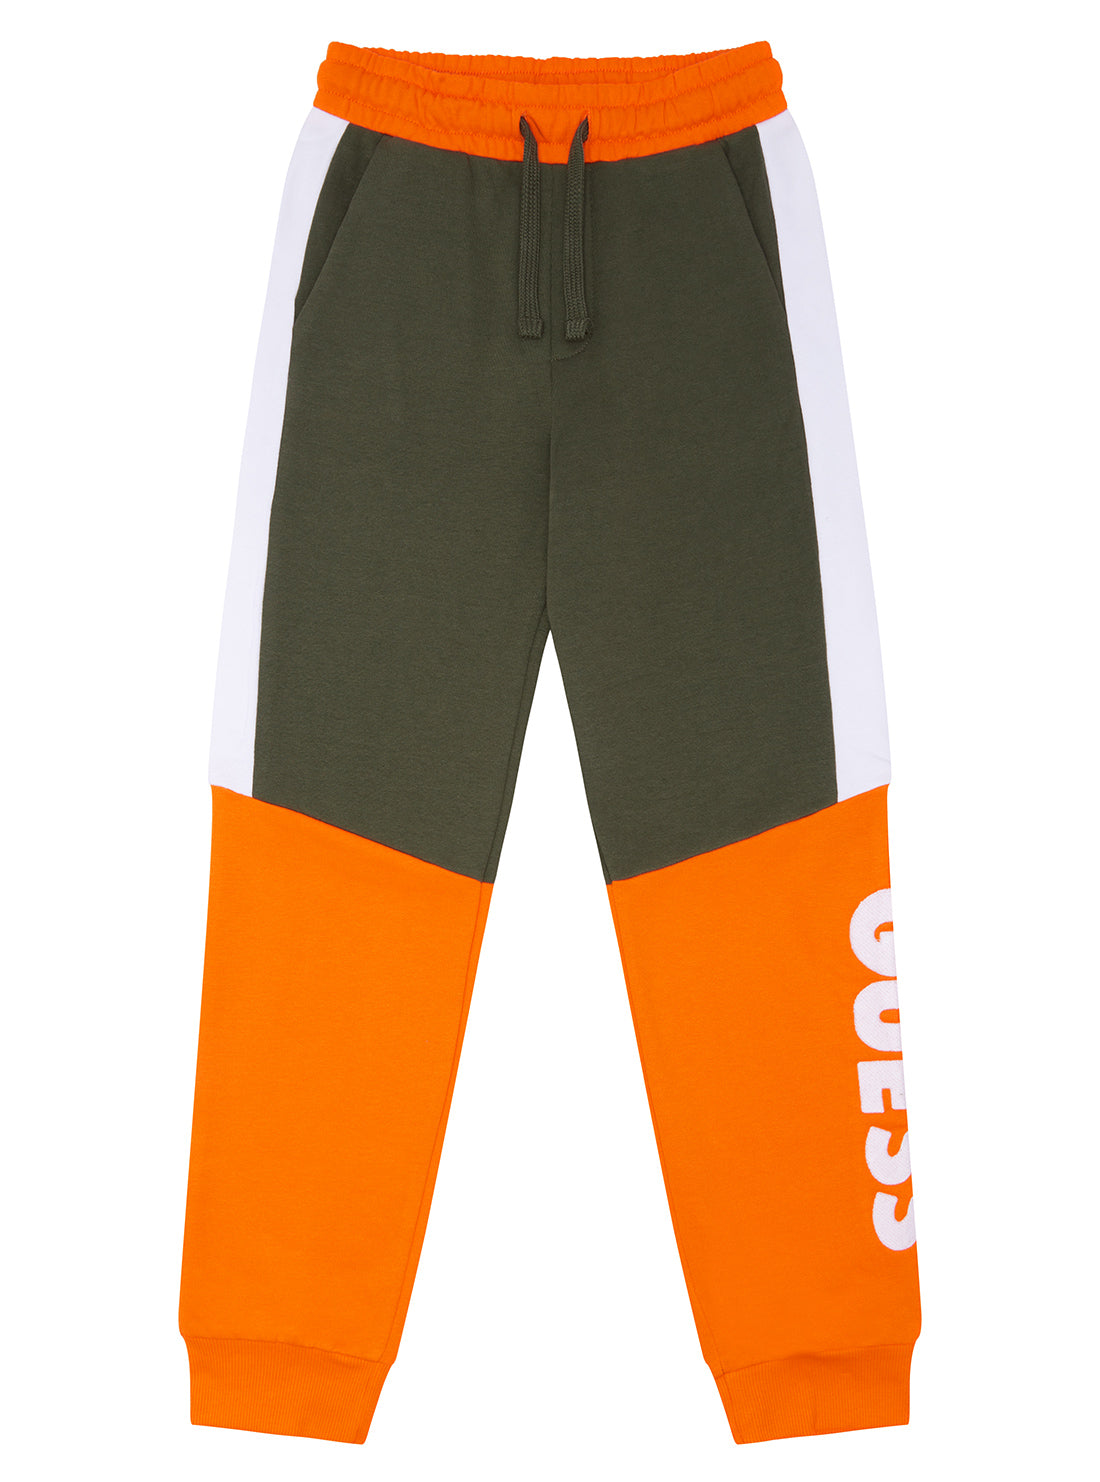 GUESS Orange Active Pants (2-7) front view